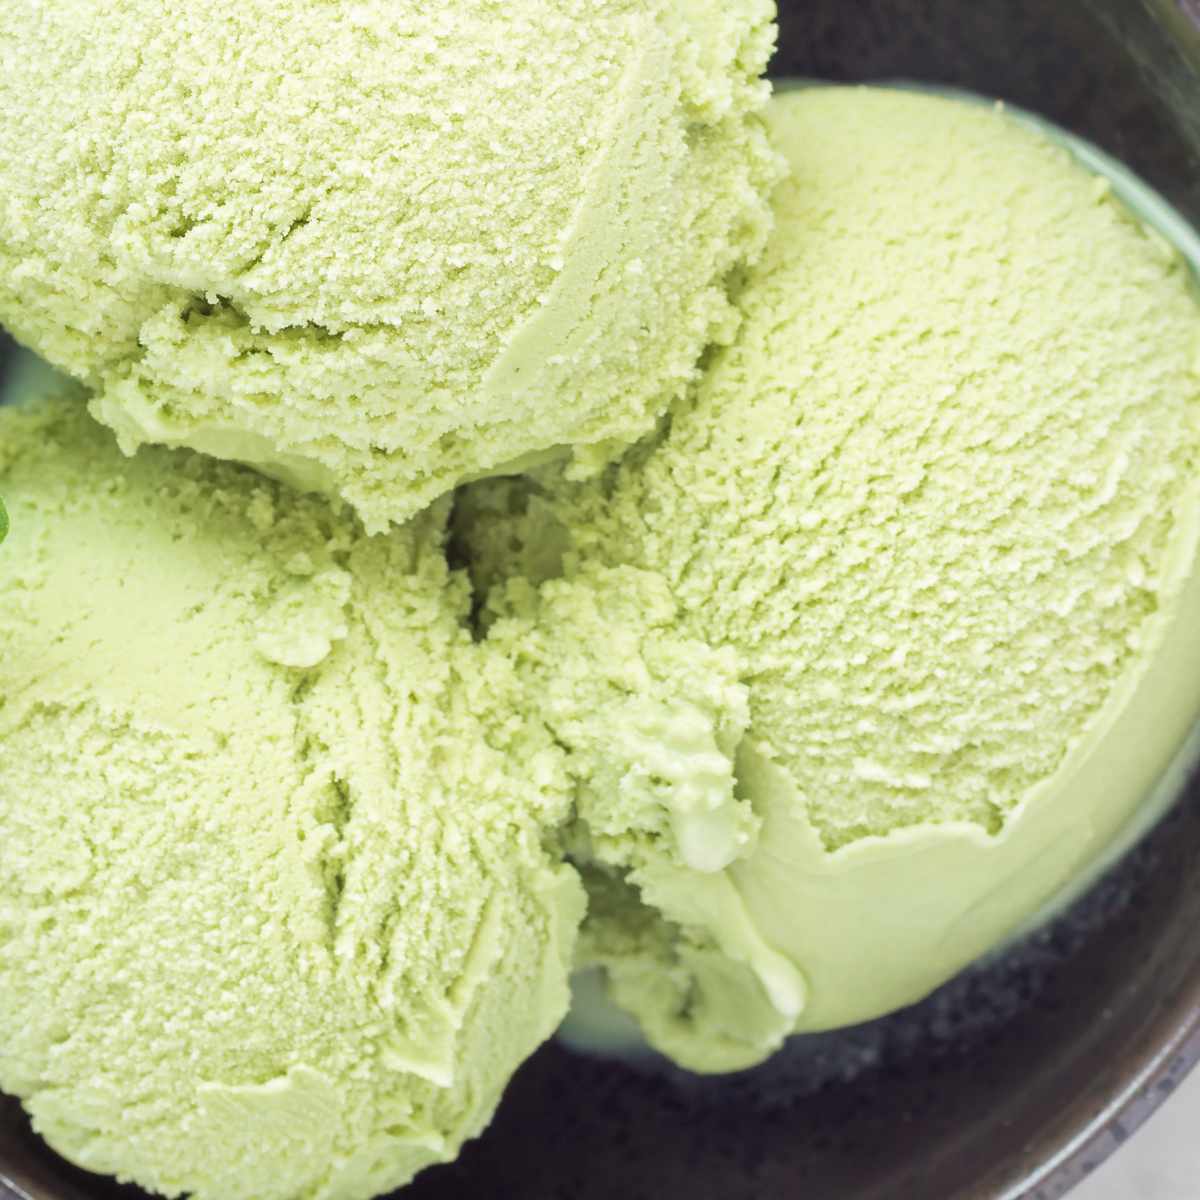 Matcha green tea ice cream balls in black bowl.